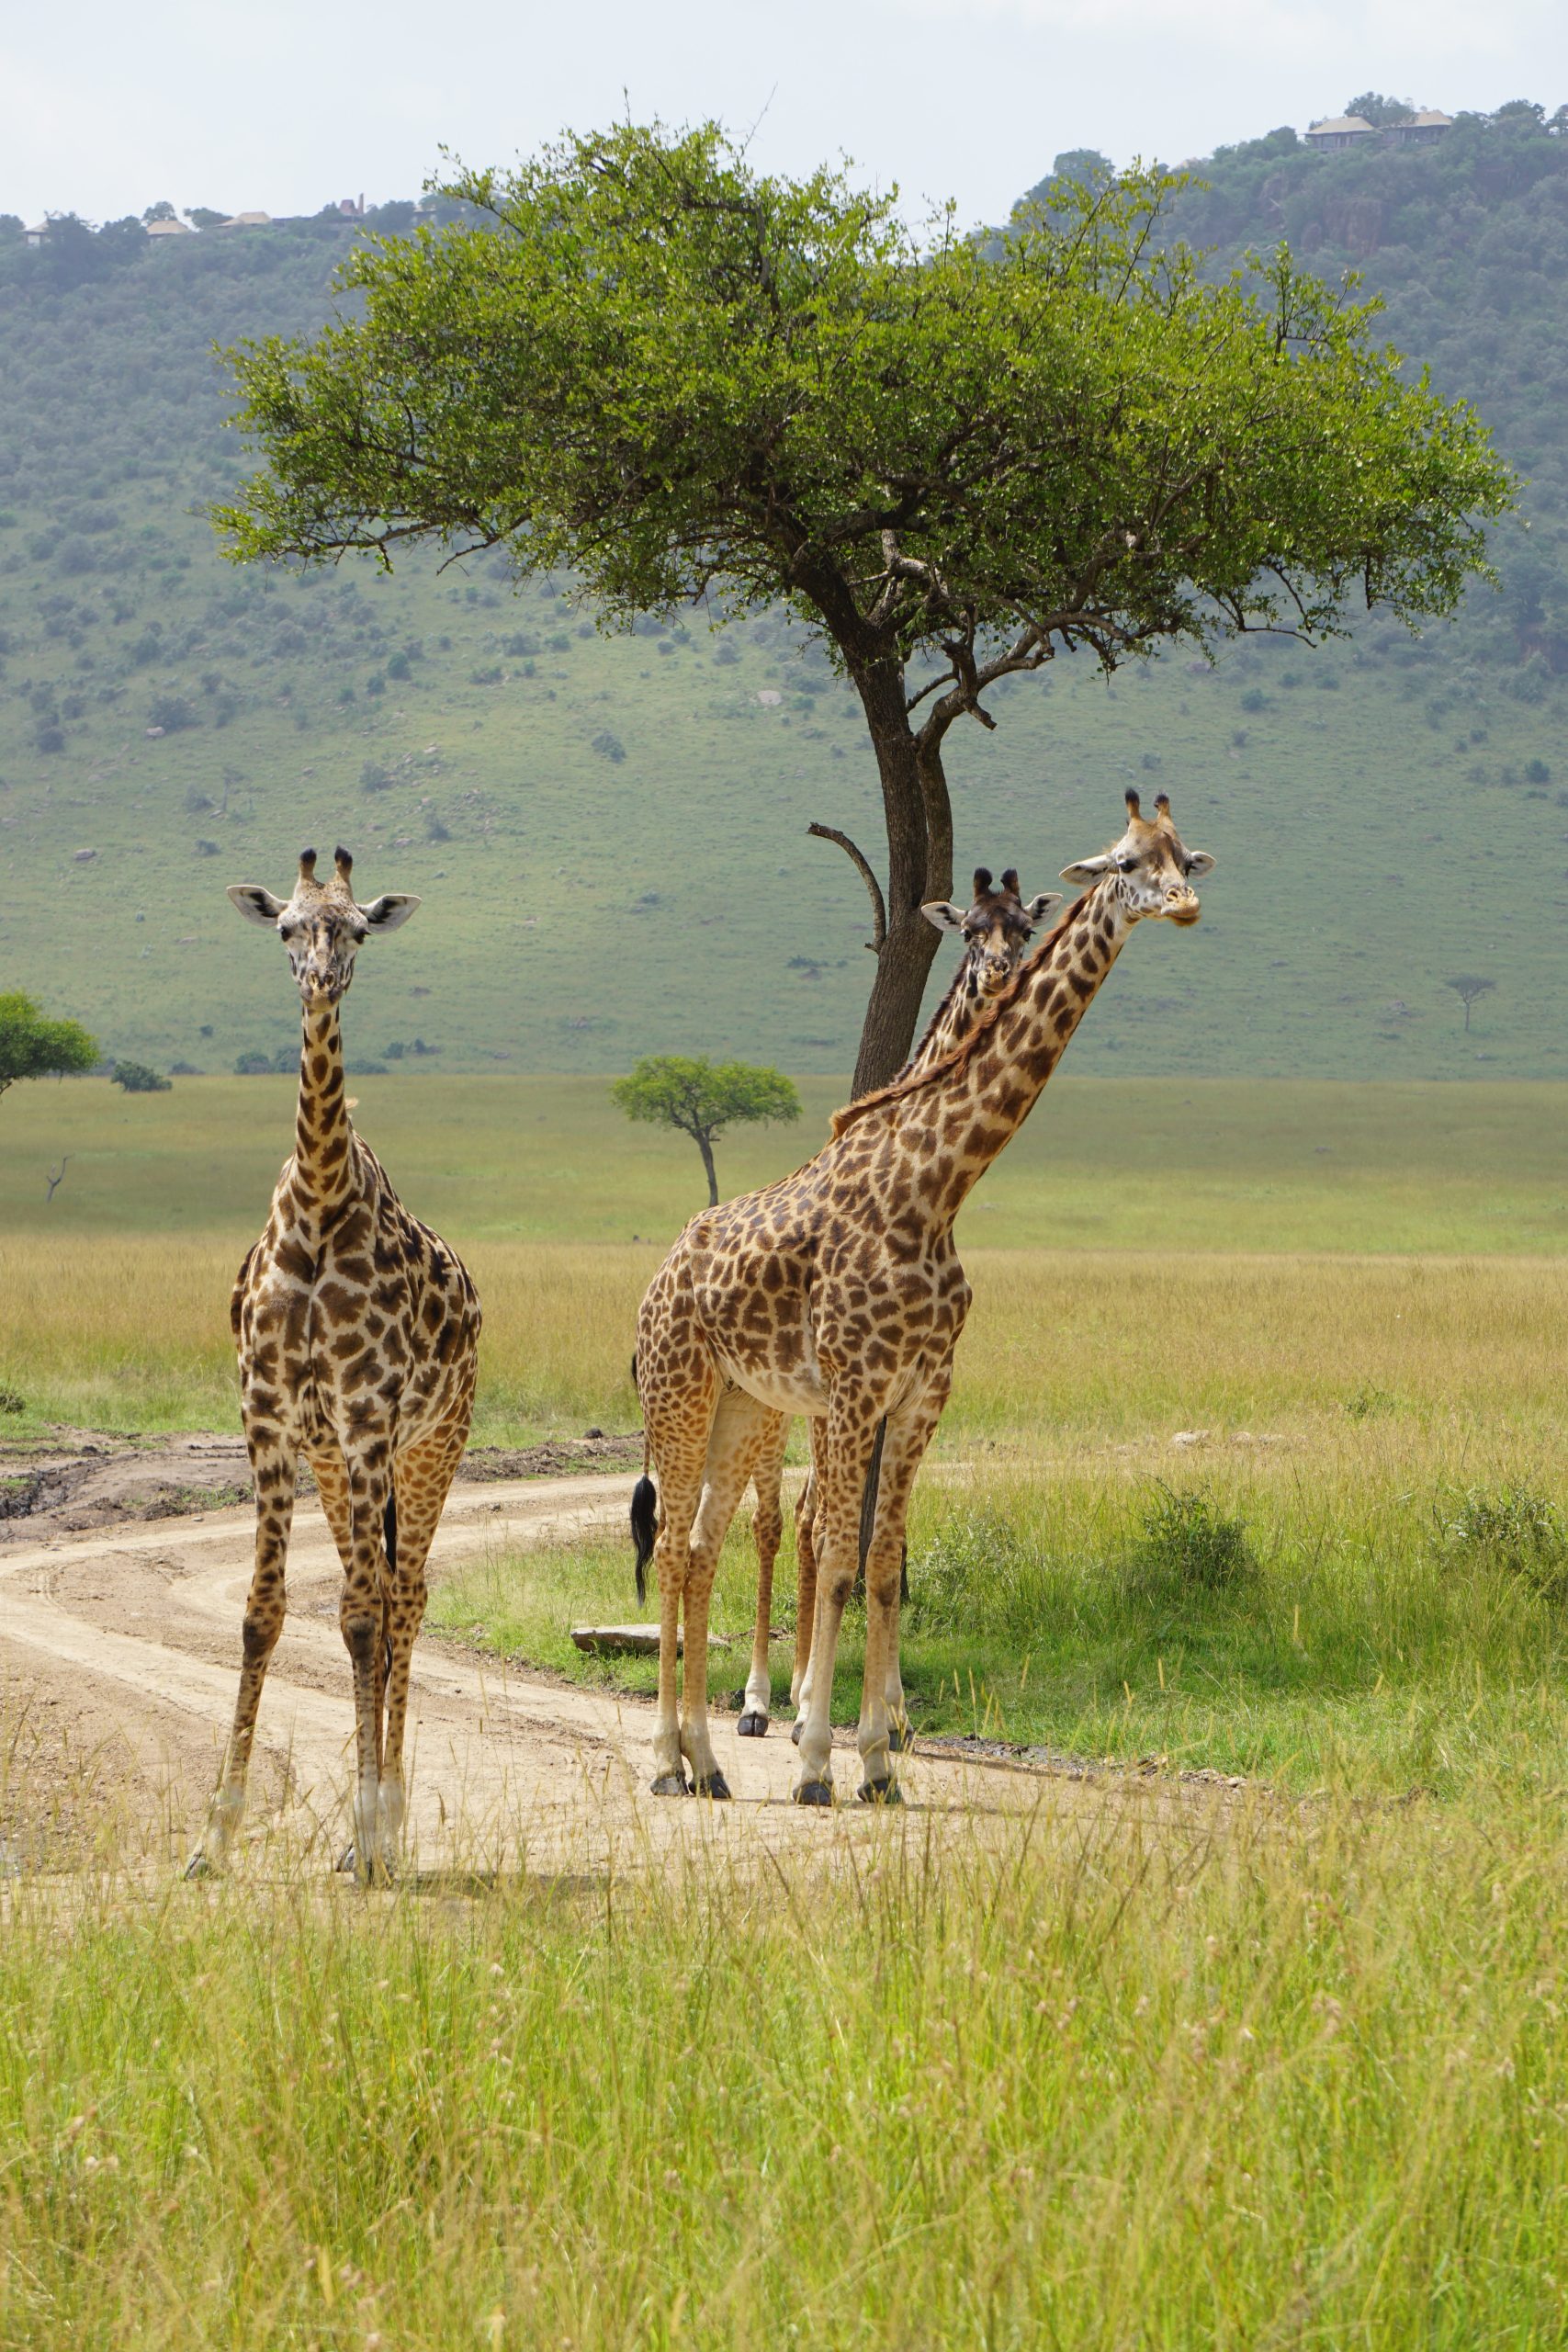 Giraffe Conservation Efforts